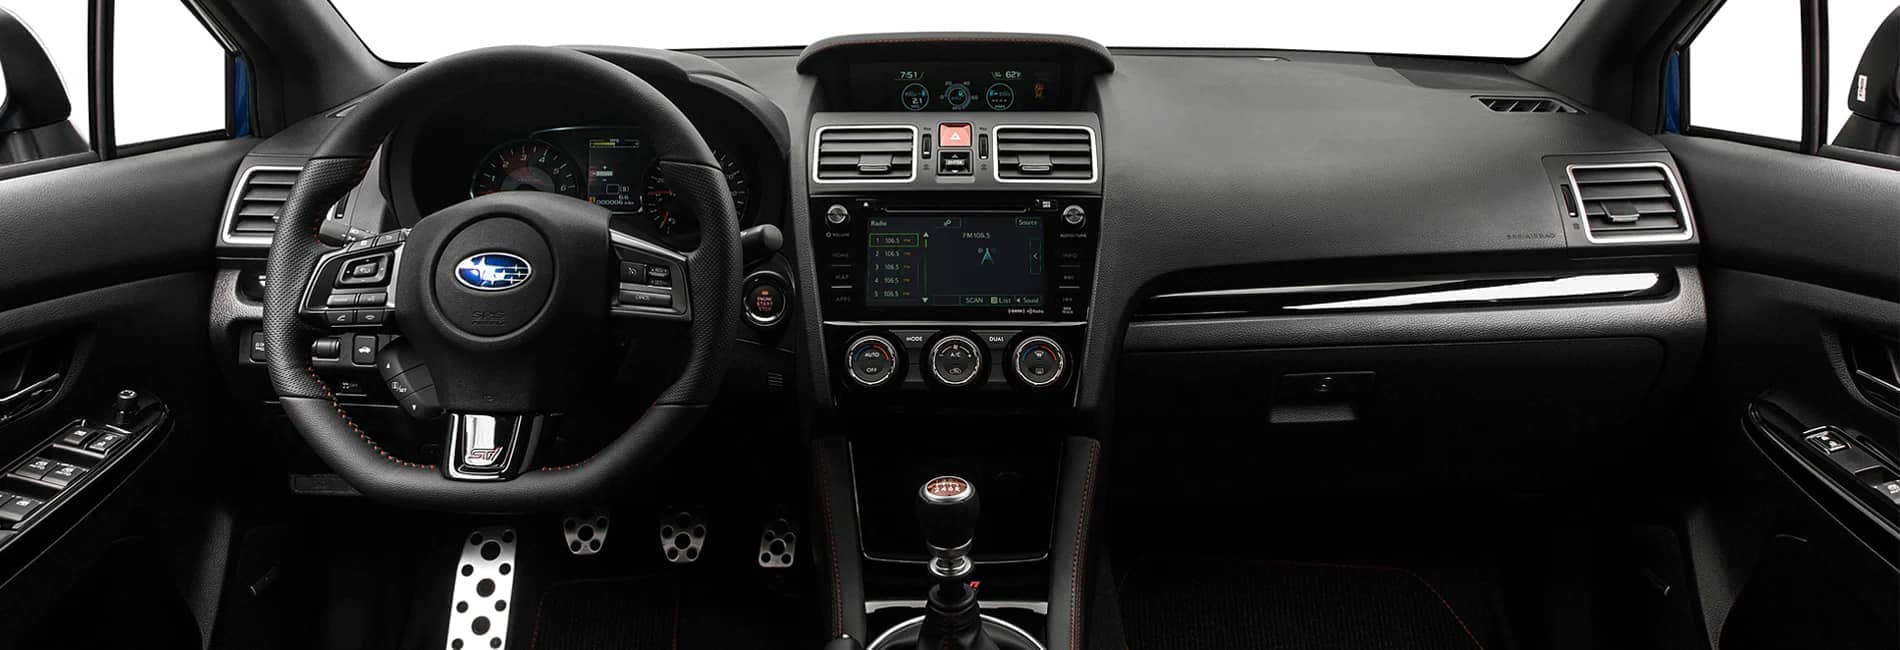 Subaru WRX Interior Features